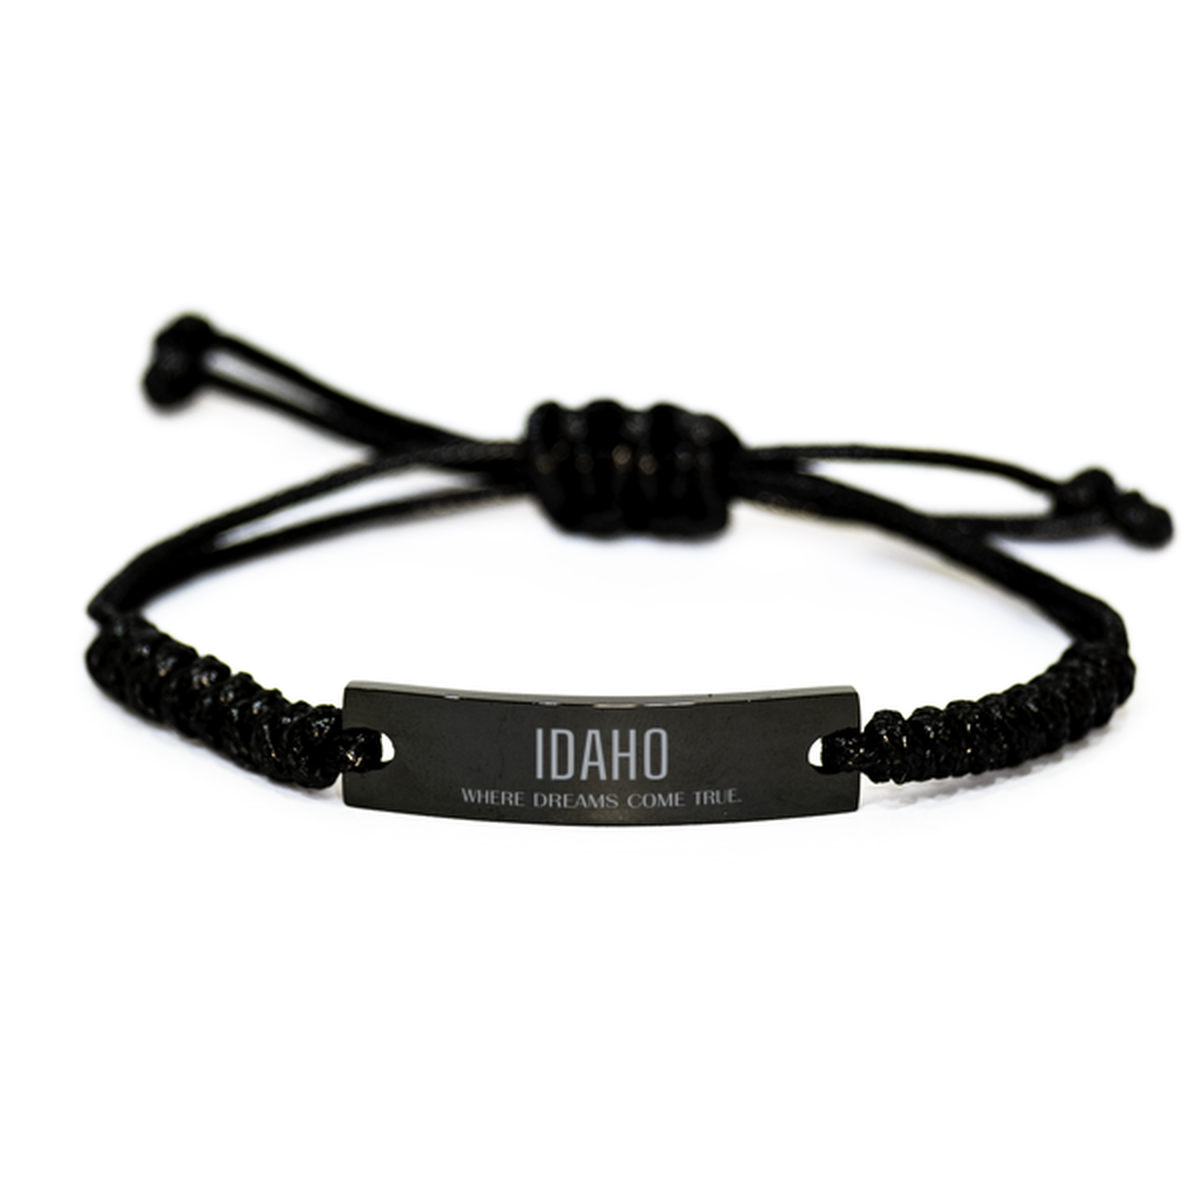 Love Idaho State Black Rope Bracelet, Idaho Where dreams come true, Birthday Inspirational Gifts For Idaho Men, Women, Friends